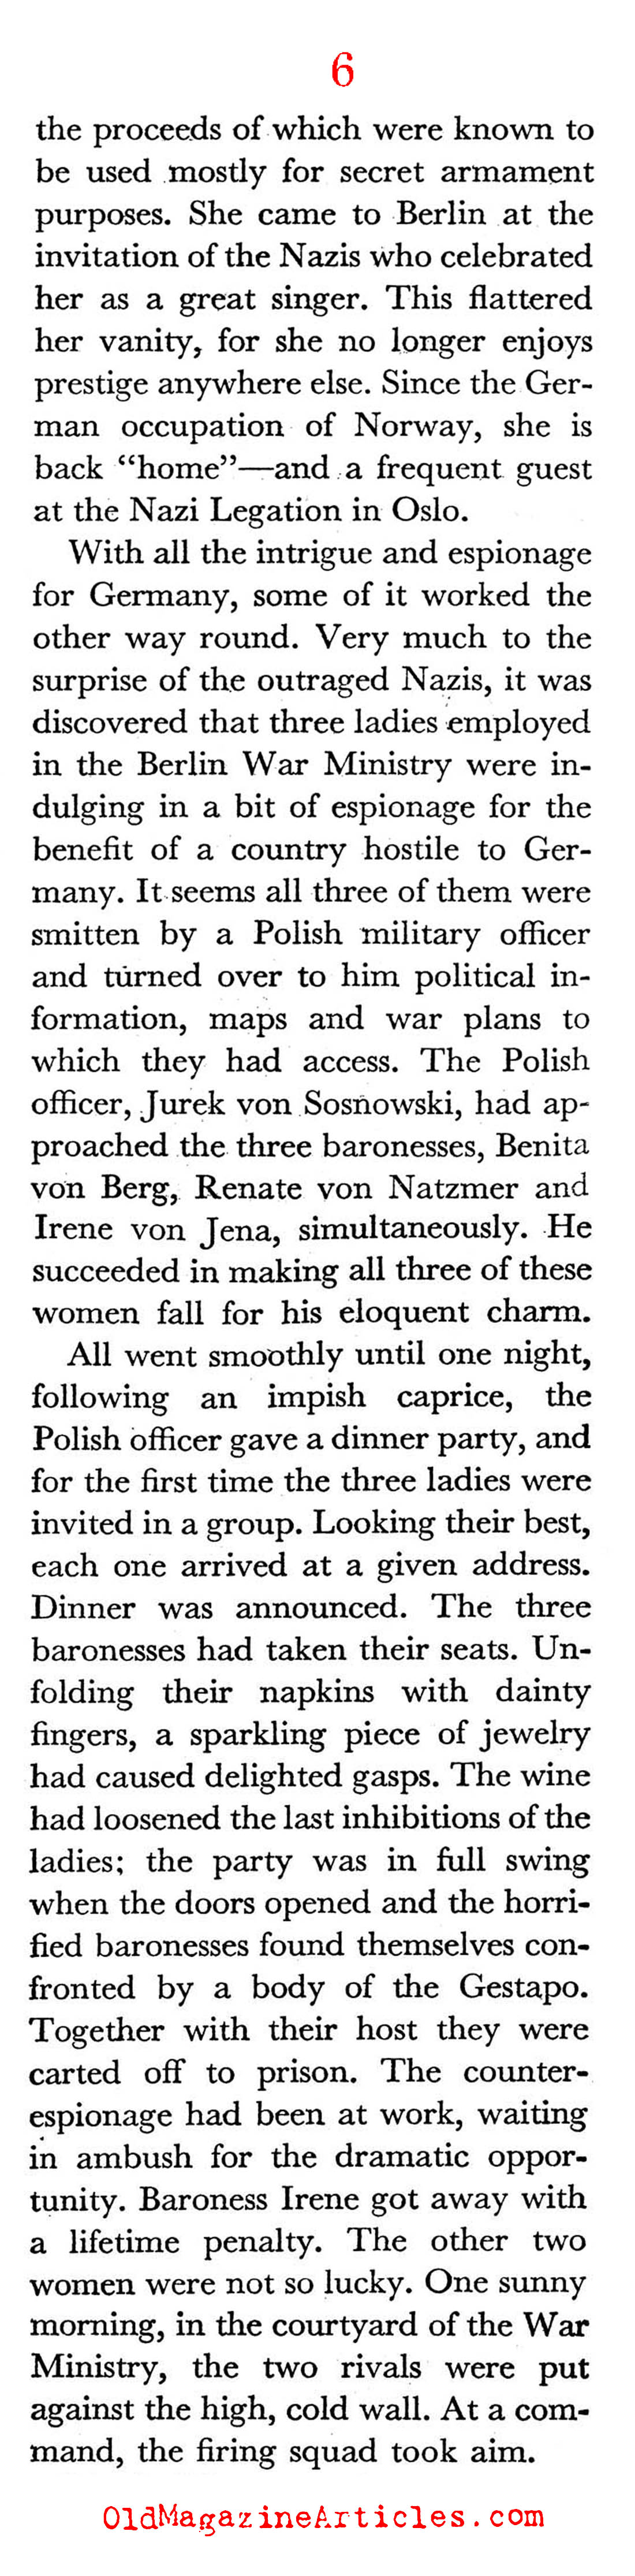 All the Pretty German Spies (Coronet Magazine, 1943)